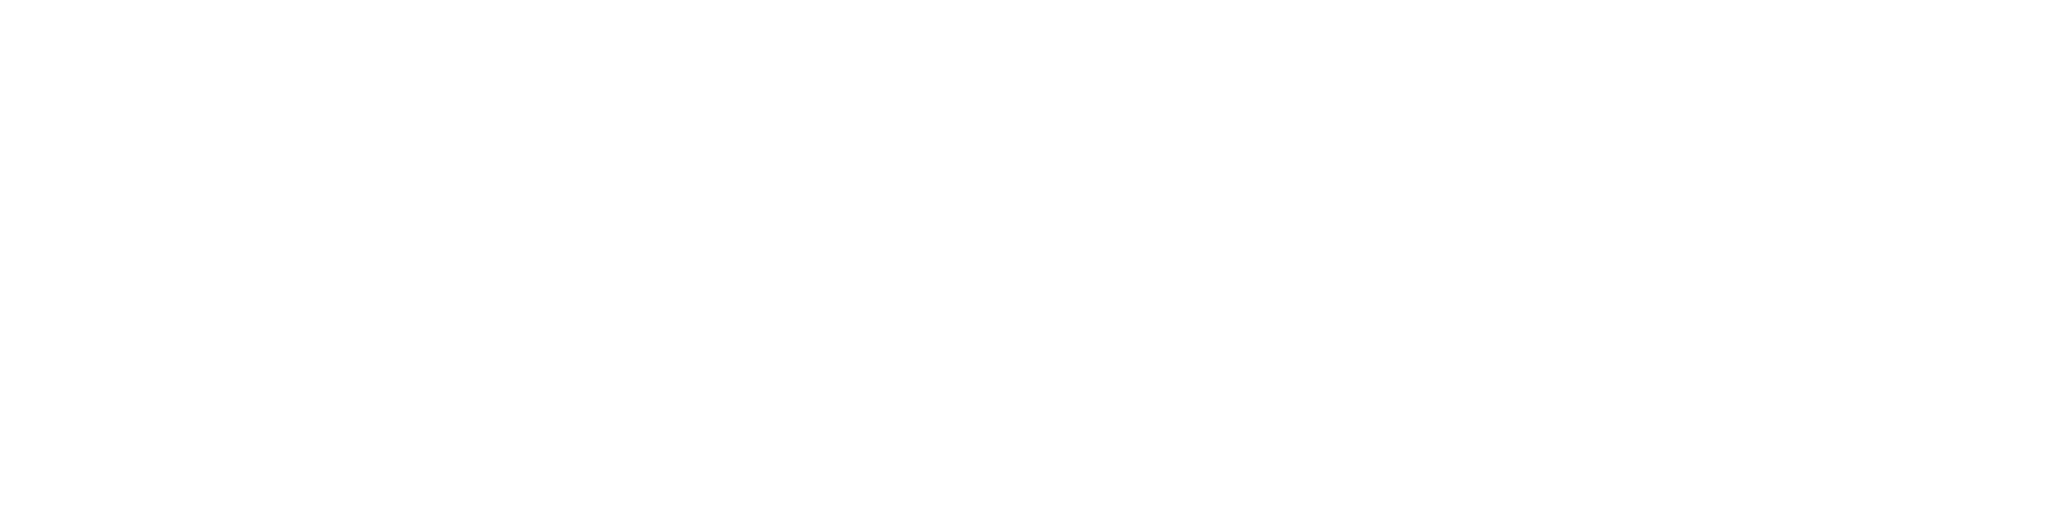 SupplySide West® - October 23-27, 2023. Expo. Oct. 25 & 26